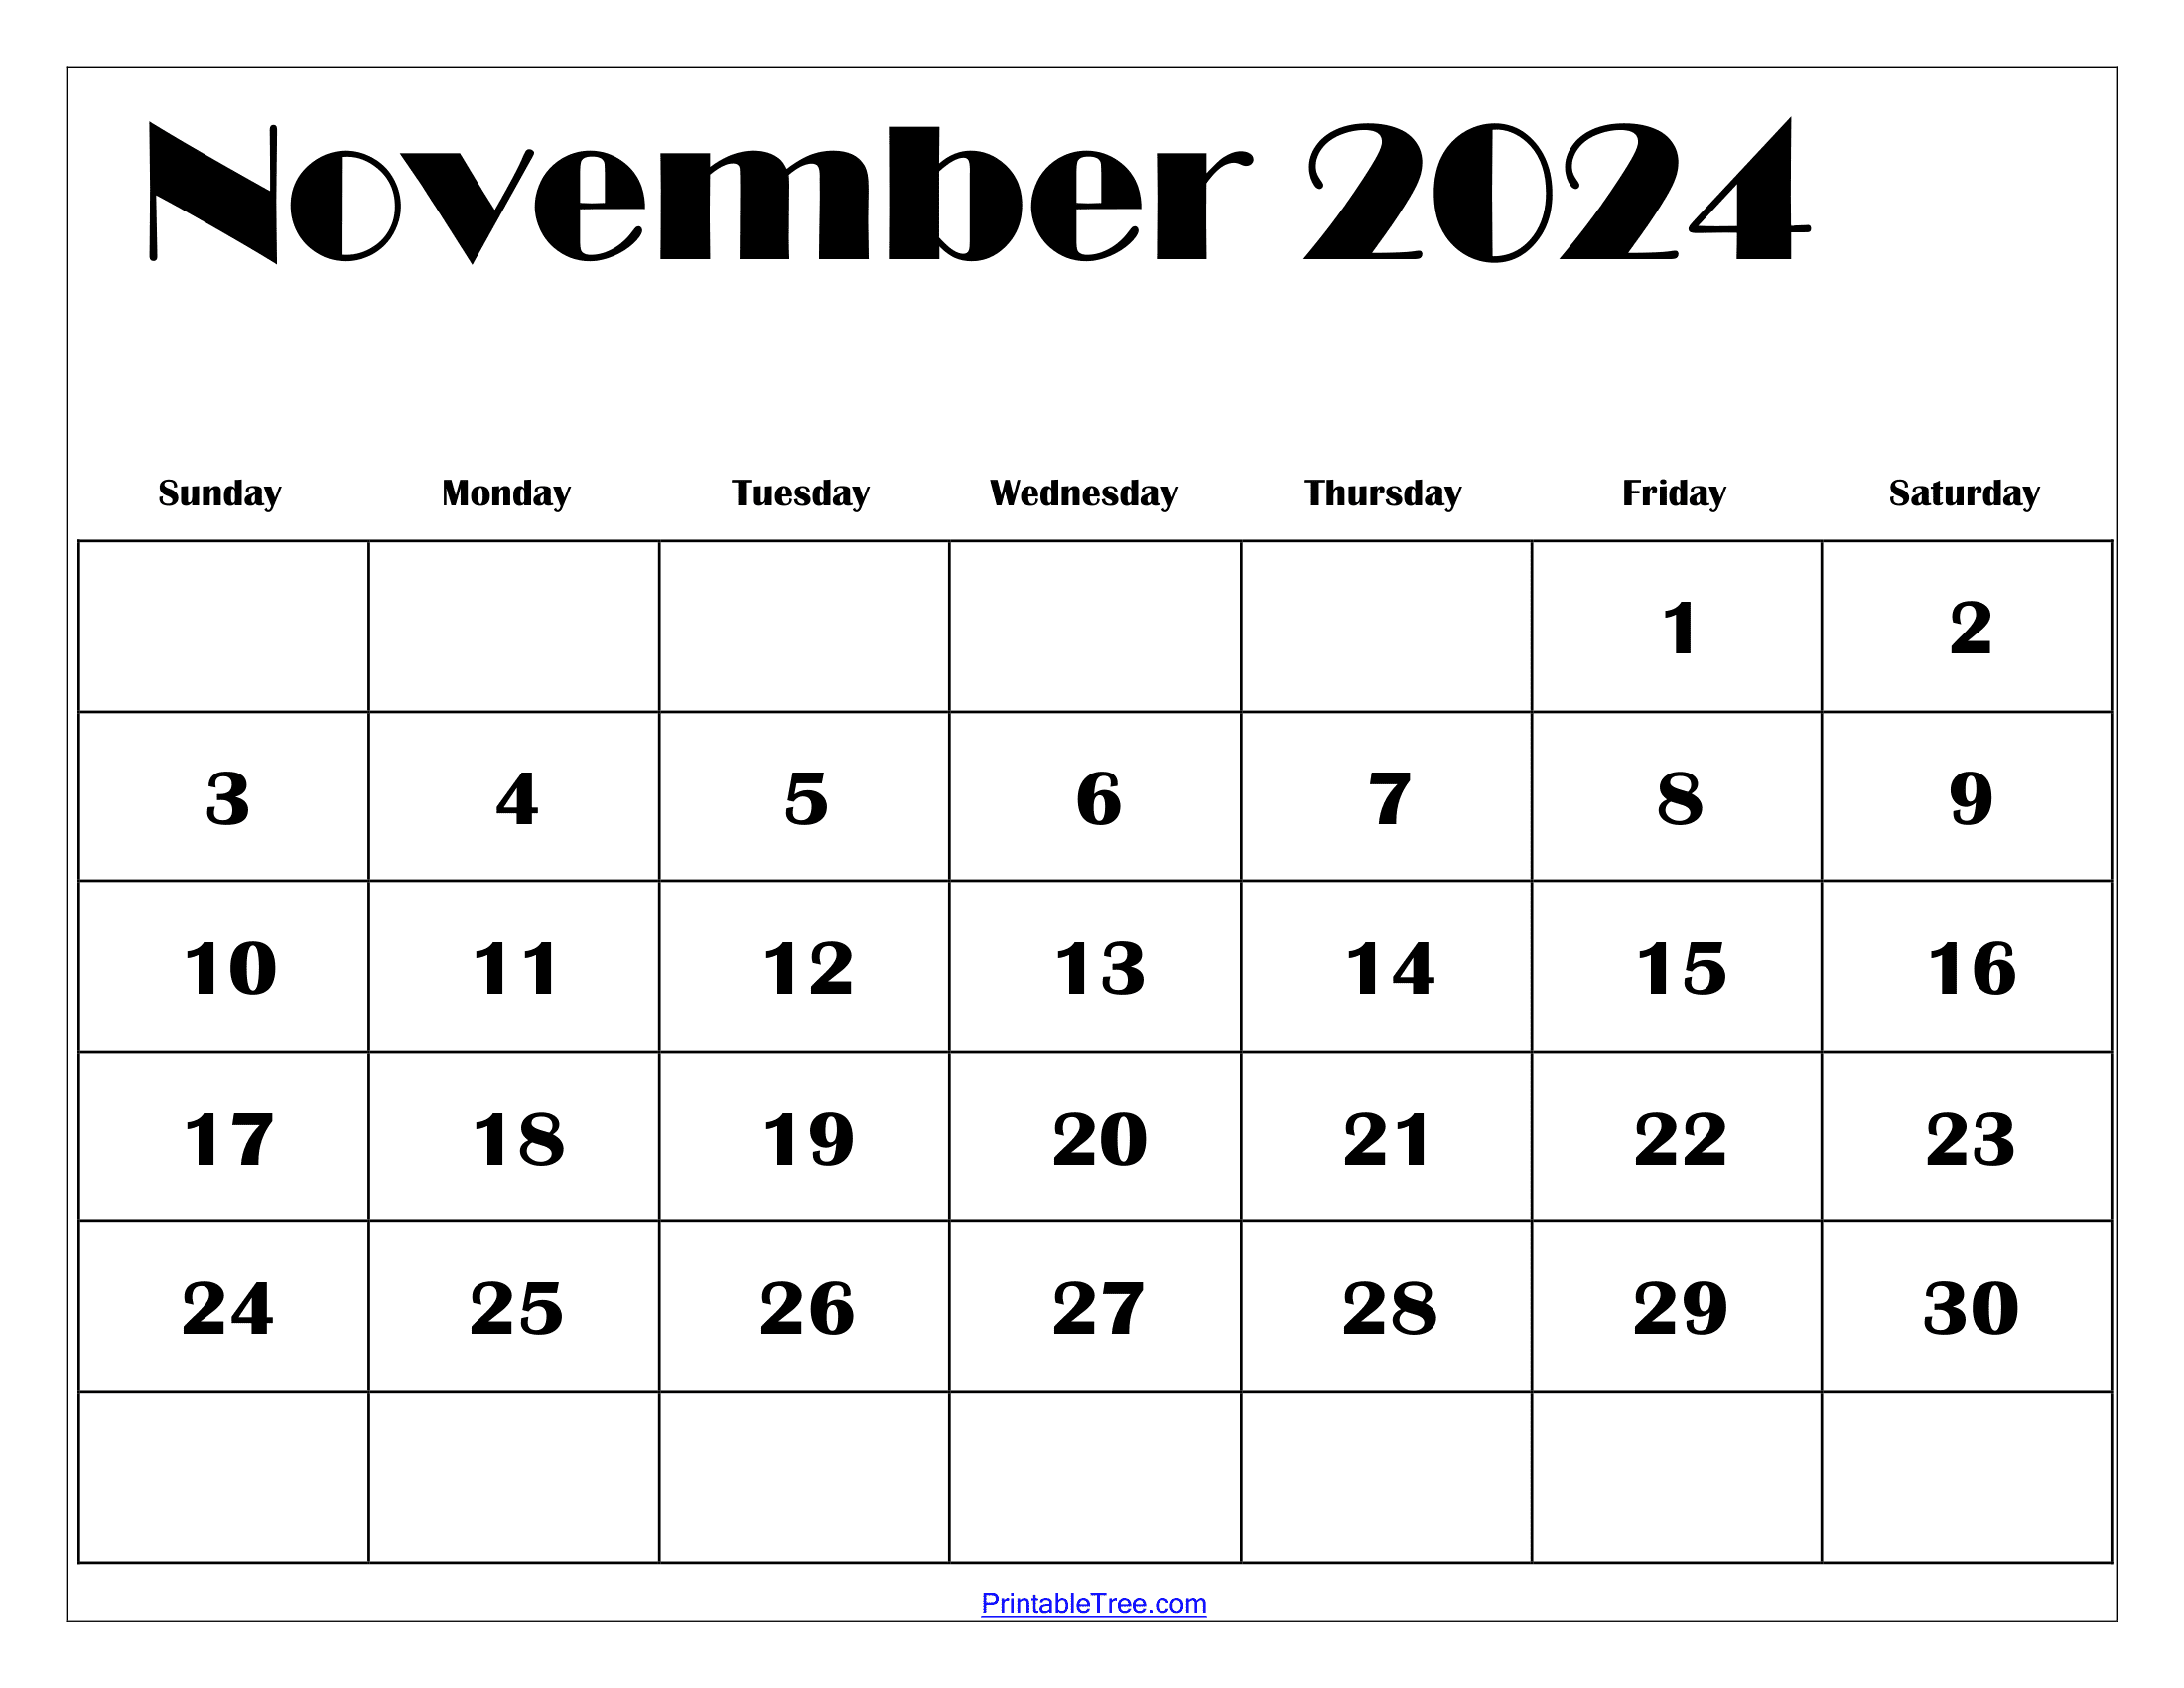 November 2024 Calendar Printable Pdf Template With Holidays for November Printable Calendar 2024